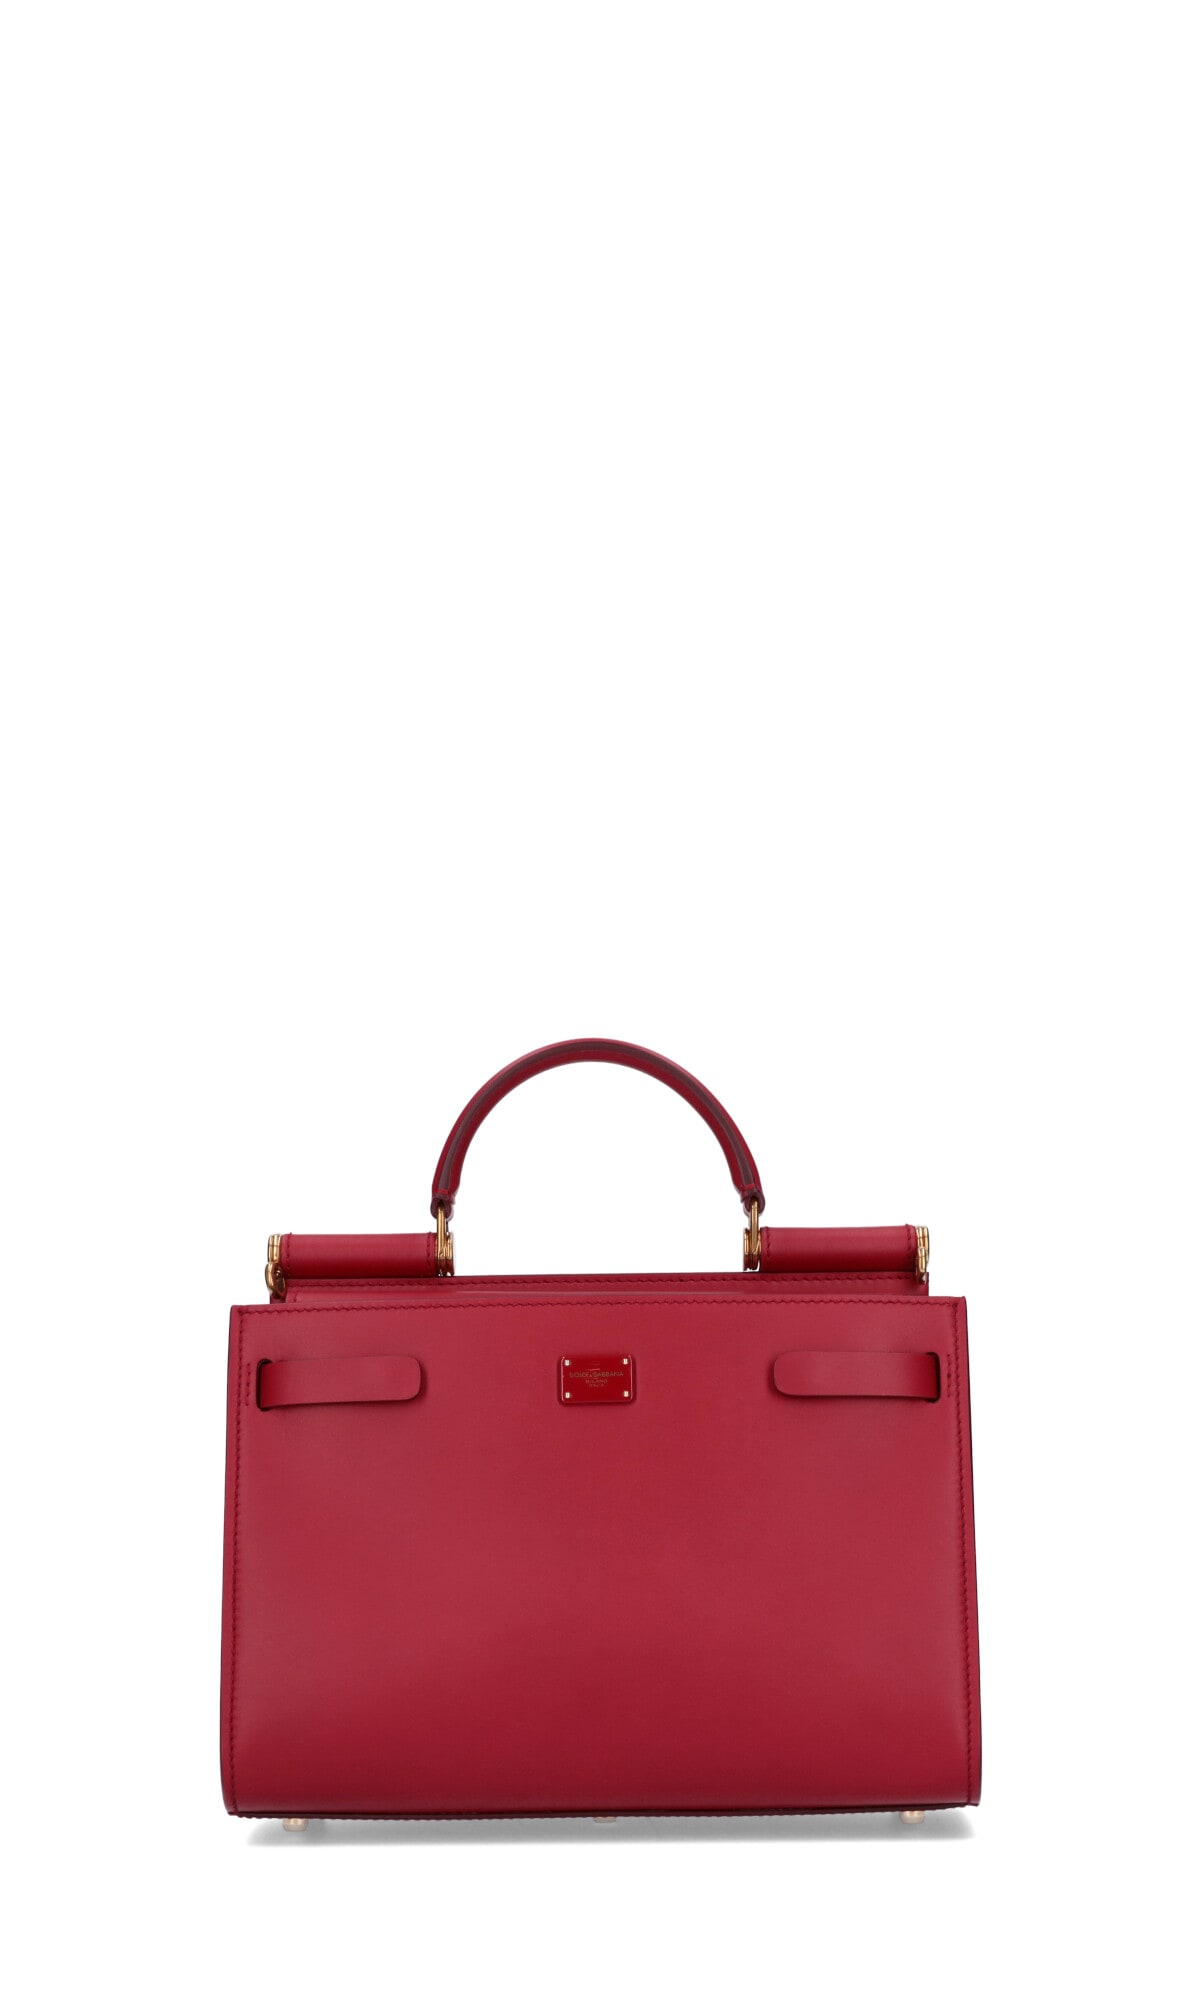 Dolce & Gabbana Tote In Red